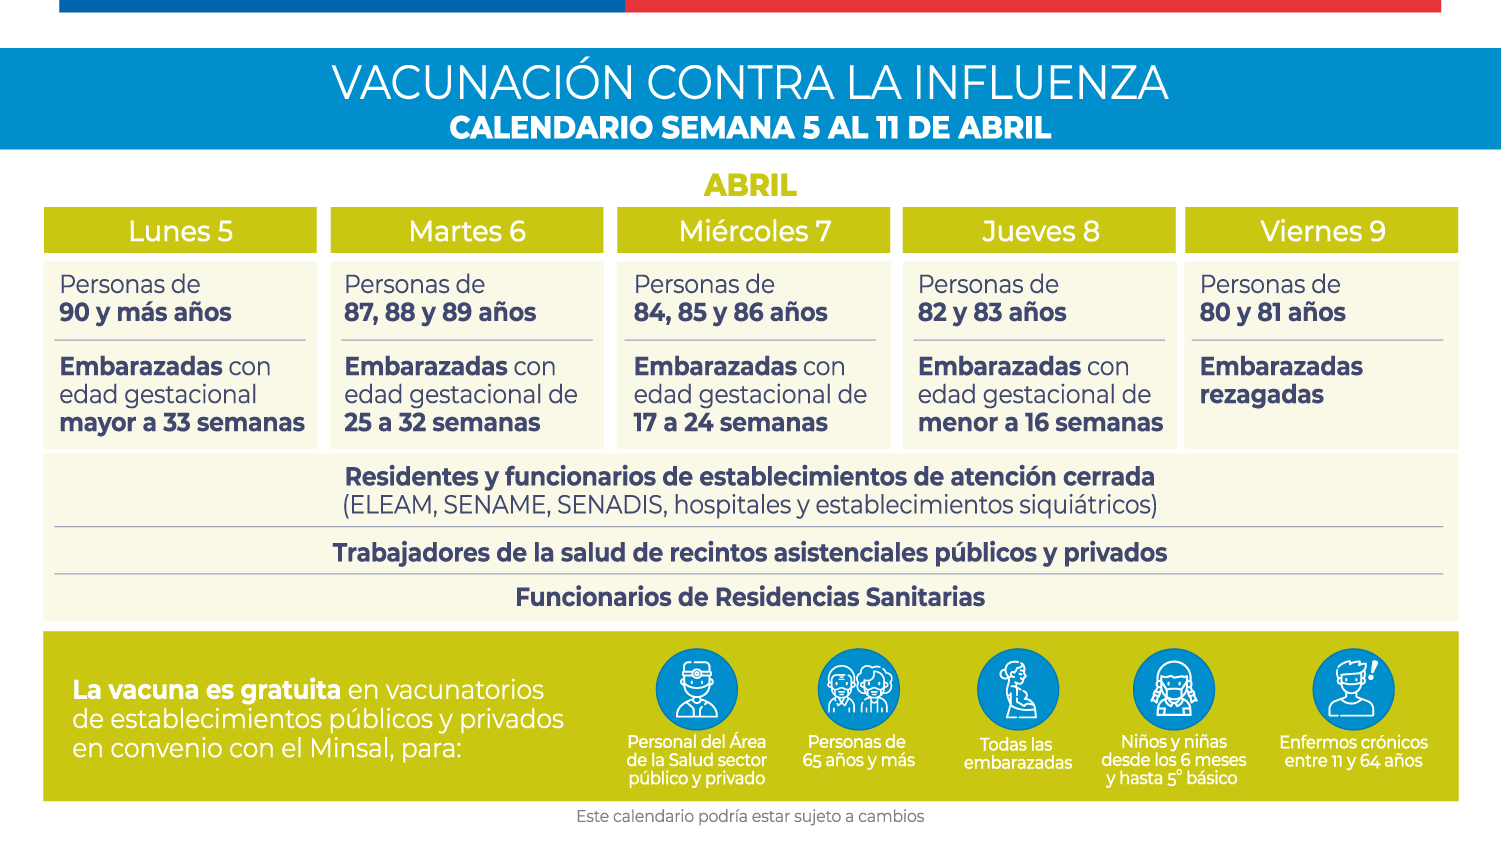 Calendario Vacunacion Influenza 2021